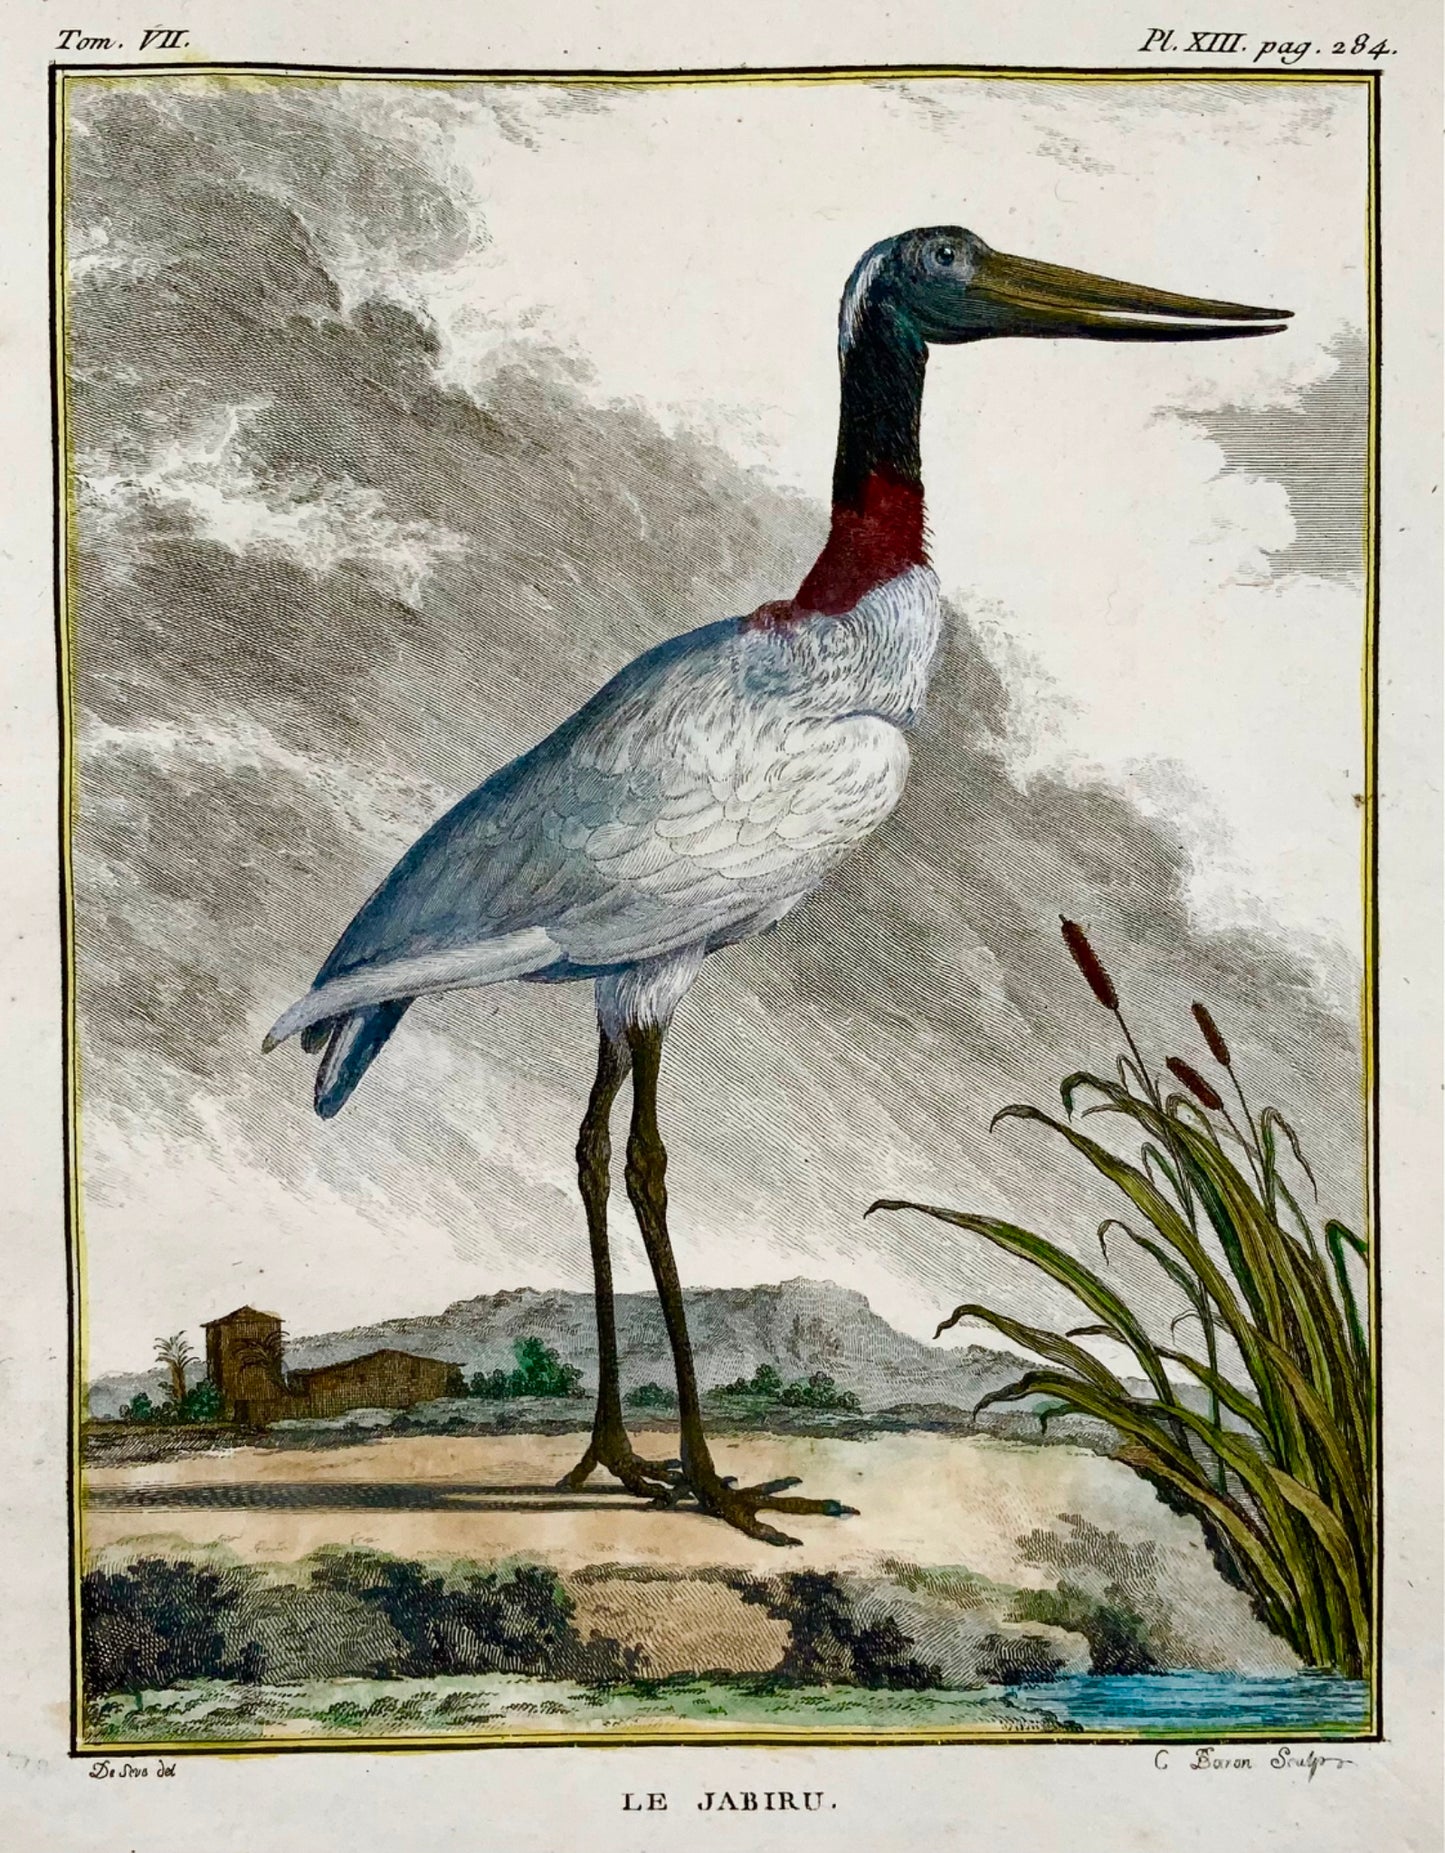 1779 de Seve - JABIRU Bird - Ornithology - 4to Large Edn engraving